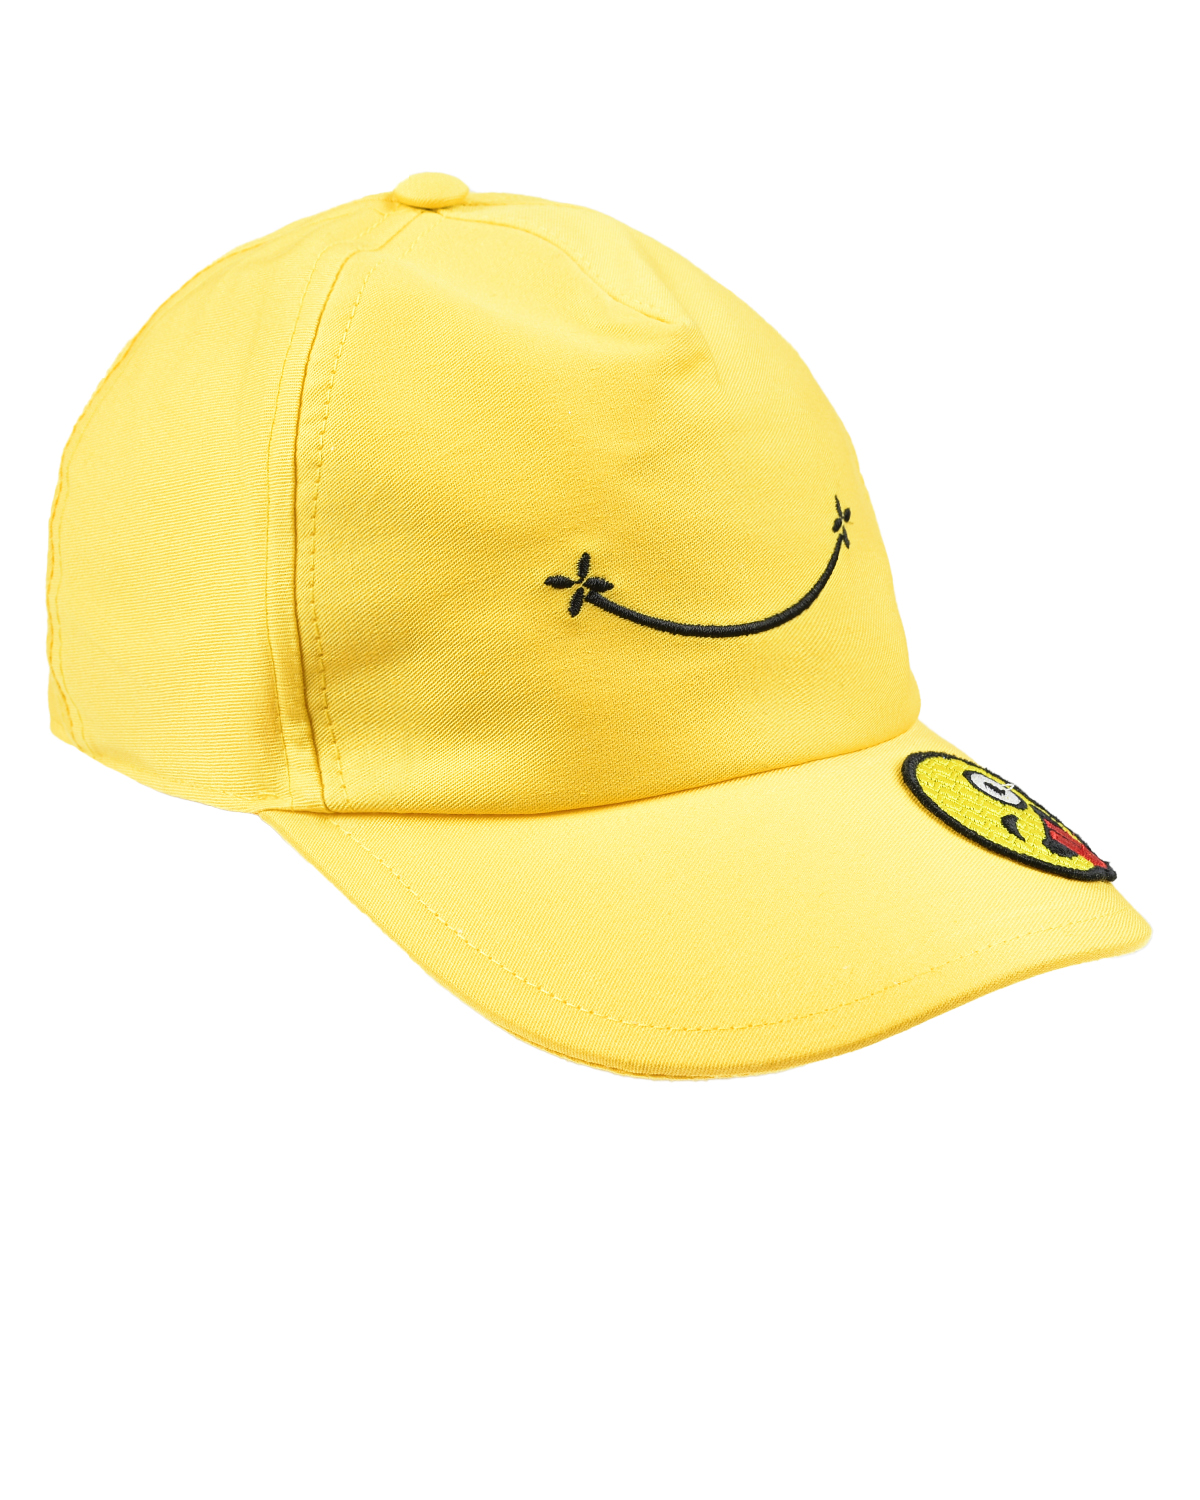 Желтая кепка с патчем "смайл" Il Trenino, размер 54, цвет желтый